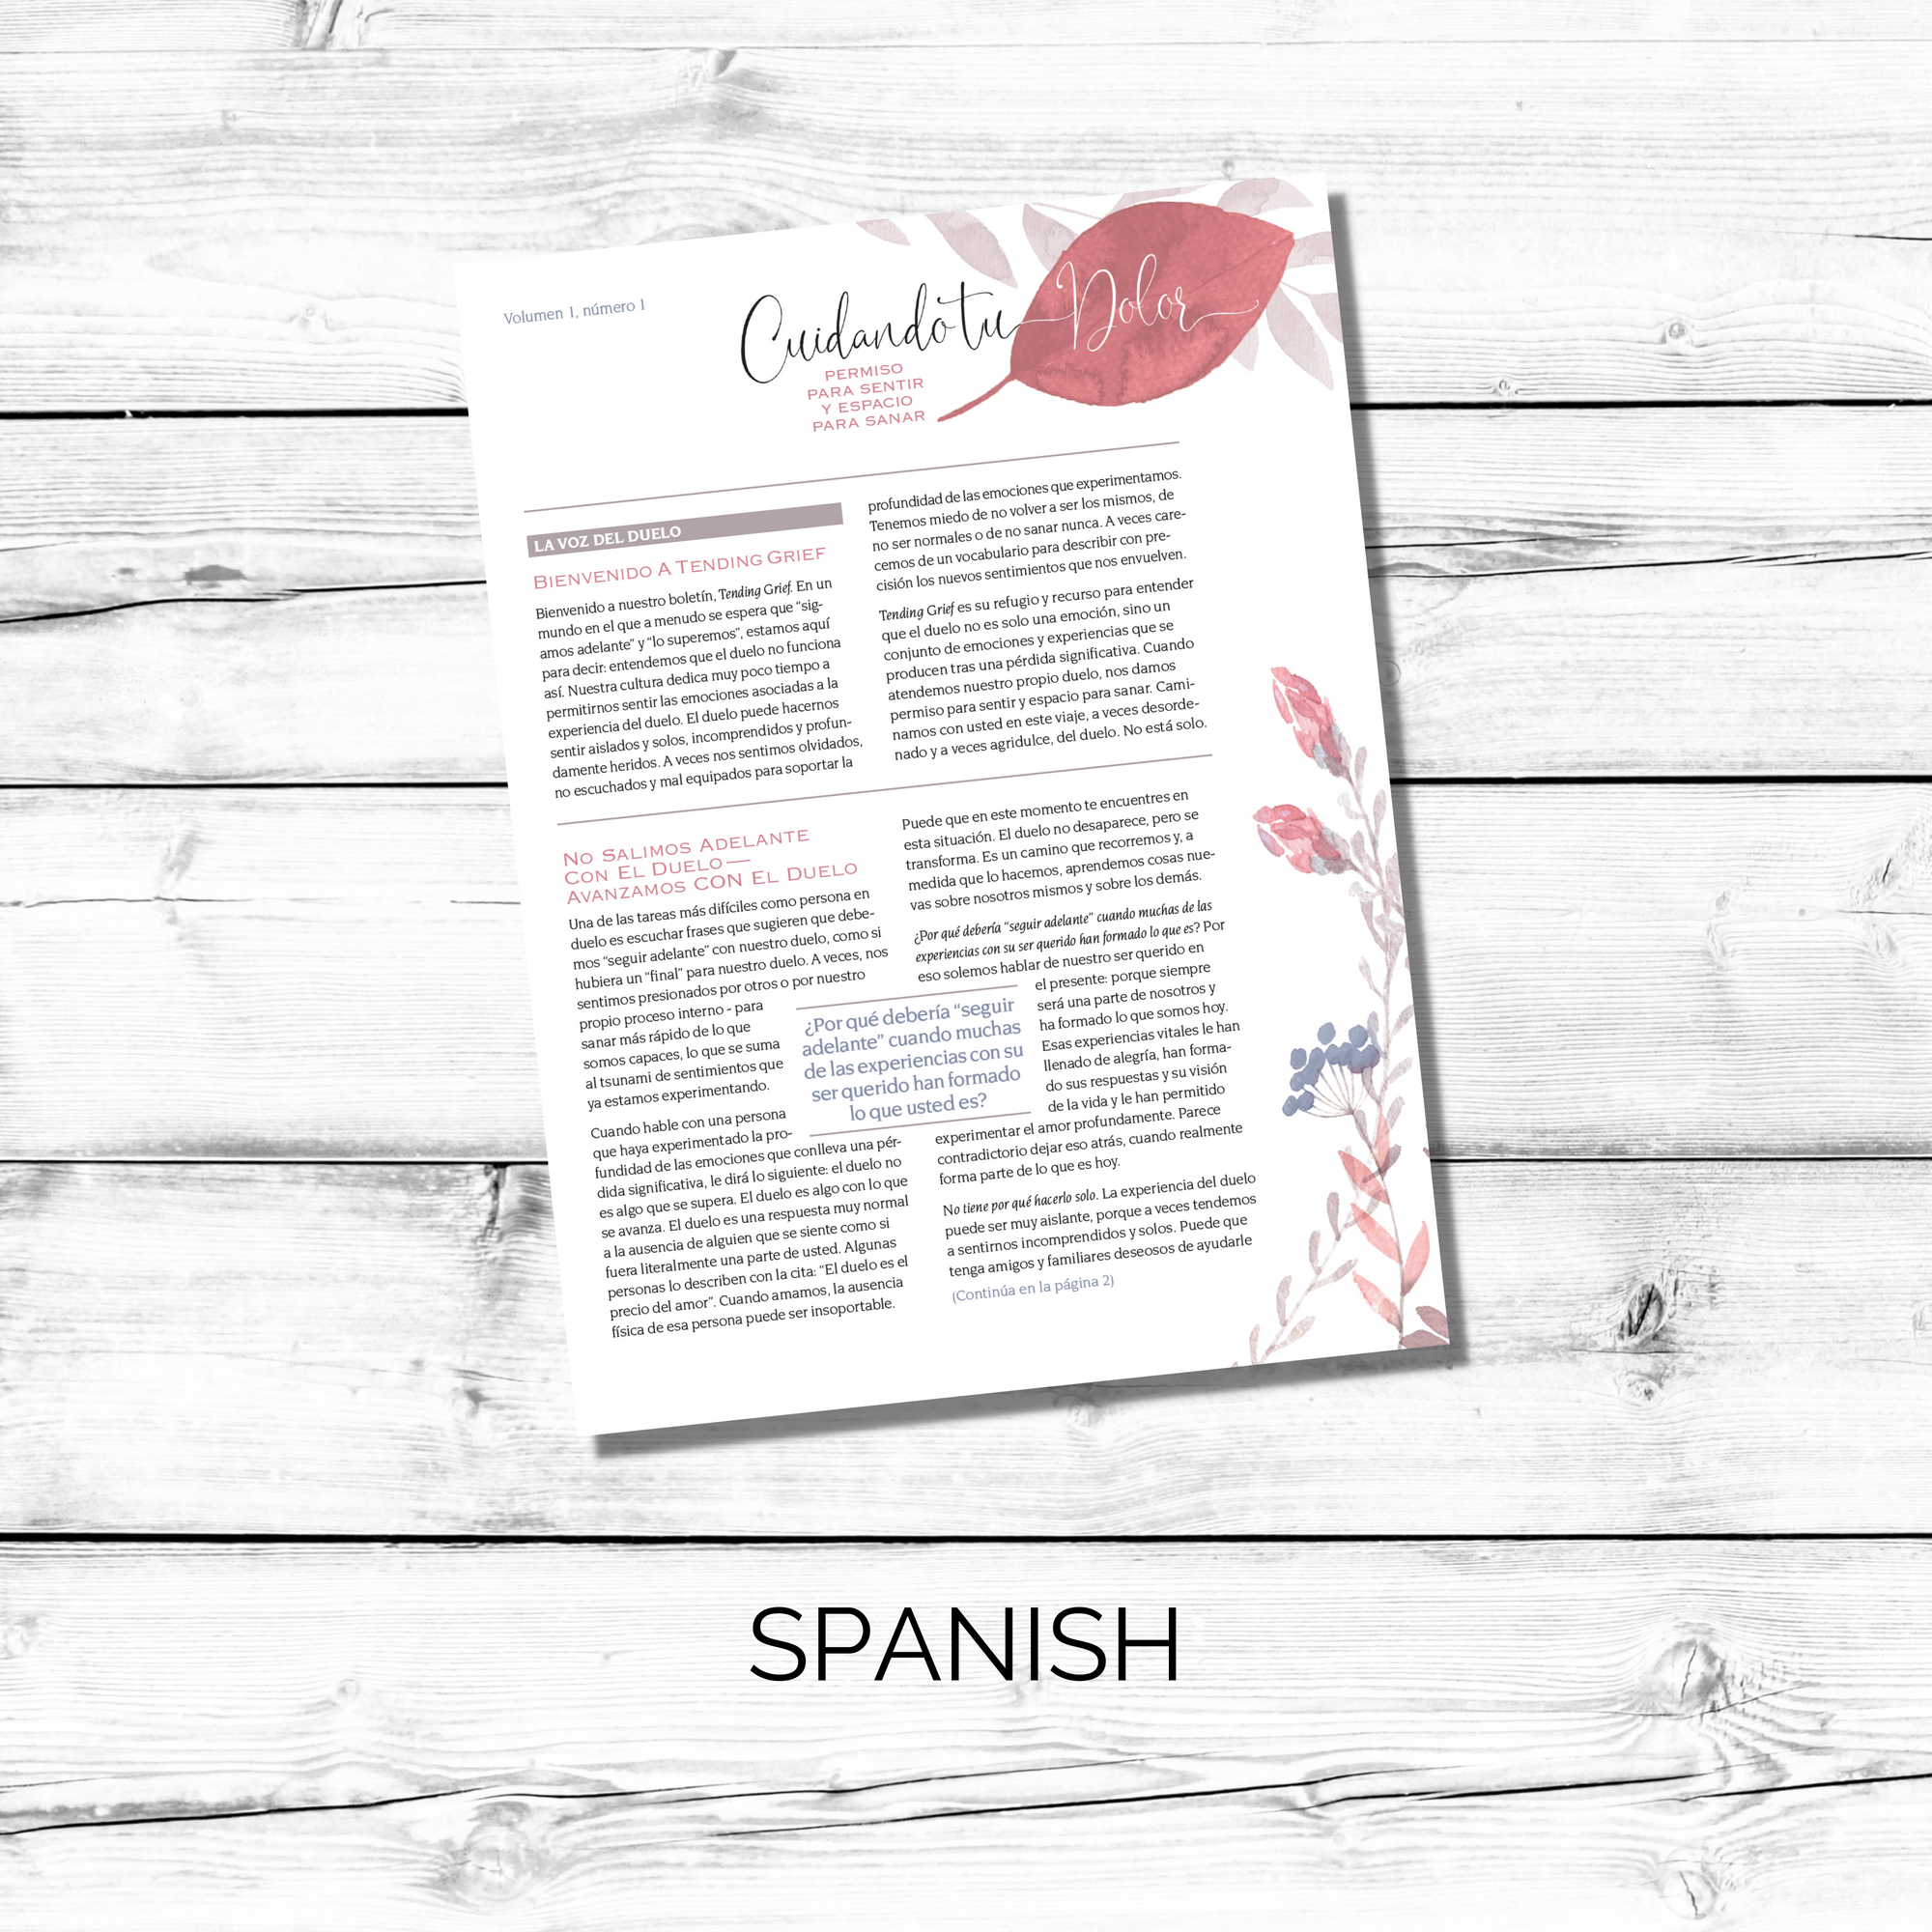 NS1001 | SPANISH Tending Grief Newsletter Issue 1